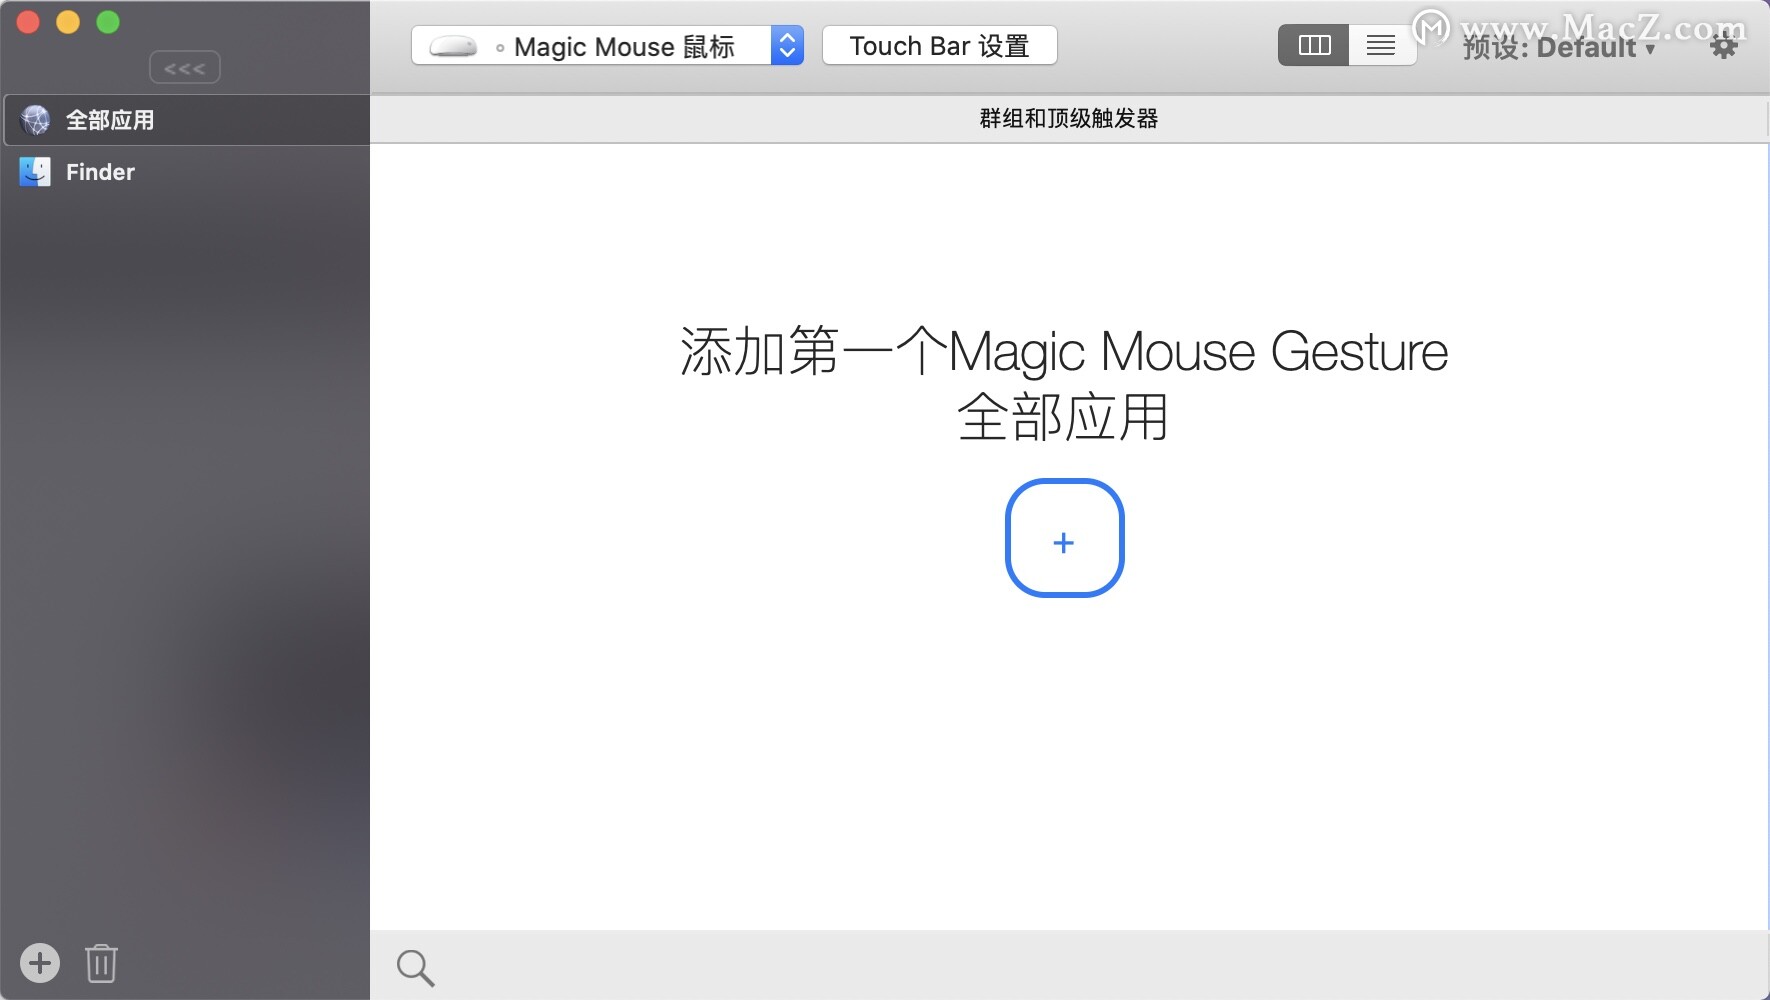 Bettertouchtool for Mac(触摸板增强工具)v3.392(1616) 中文版